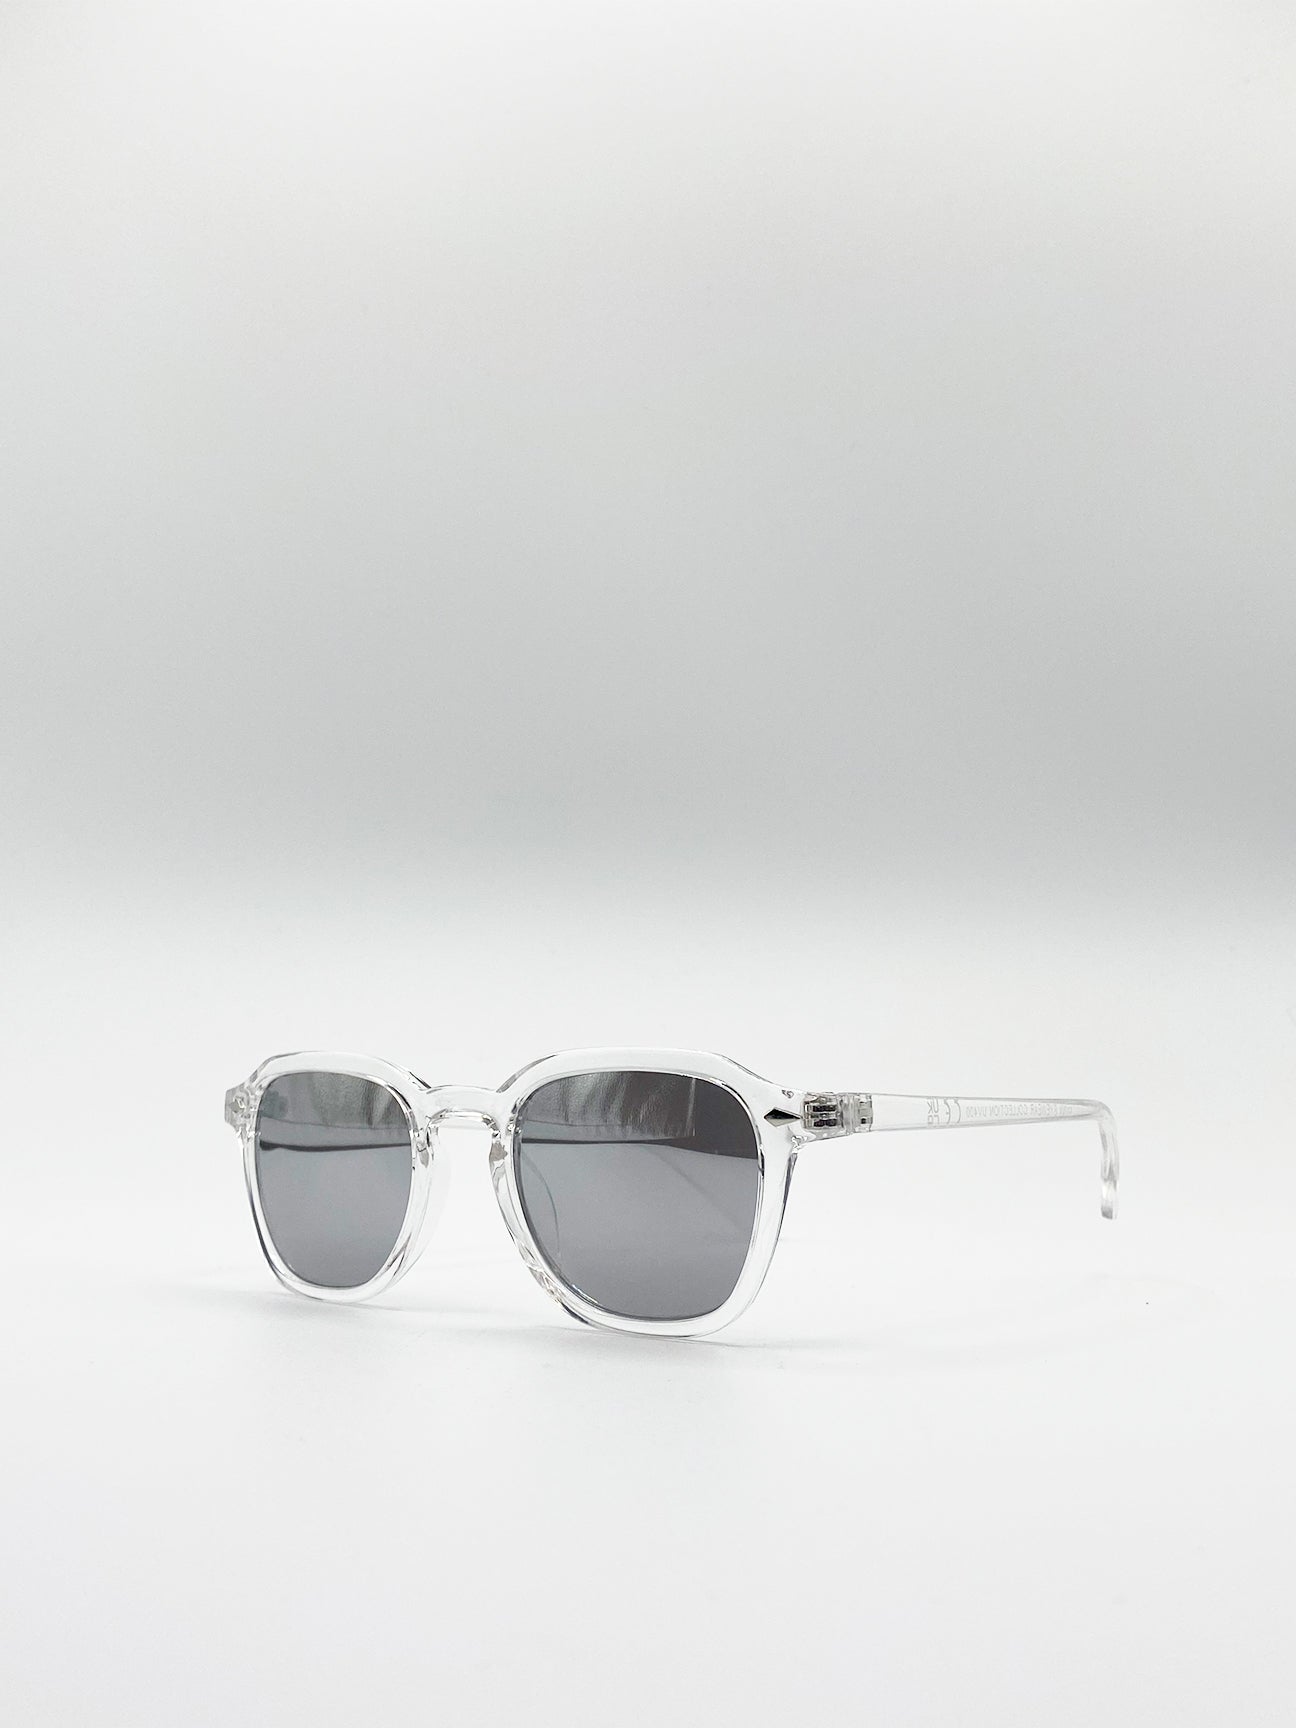 Clear Frame Classic Preppy Sunglasses With Key Hole Nosebridge